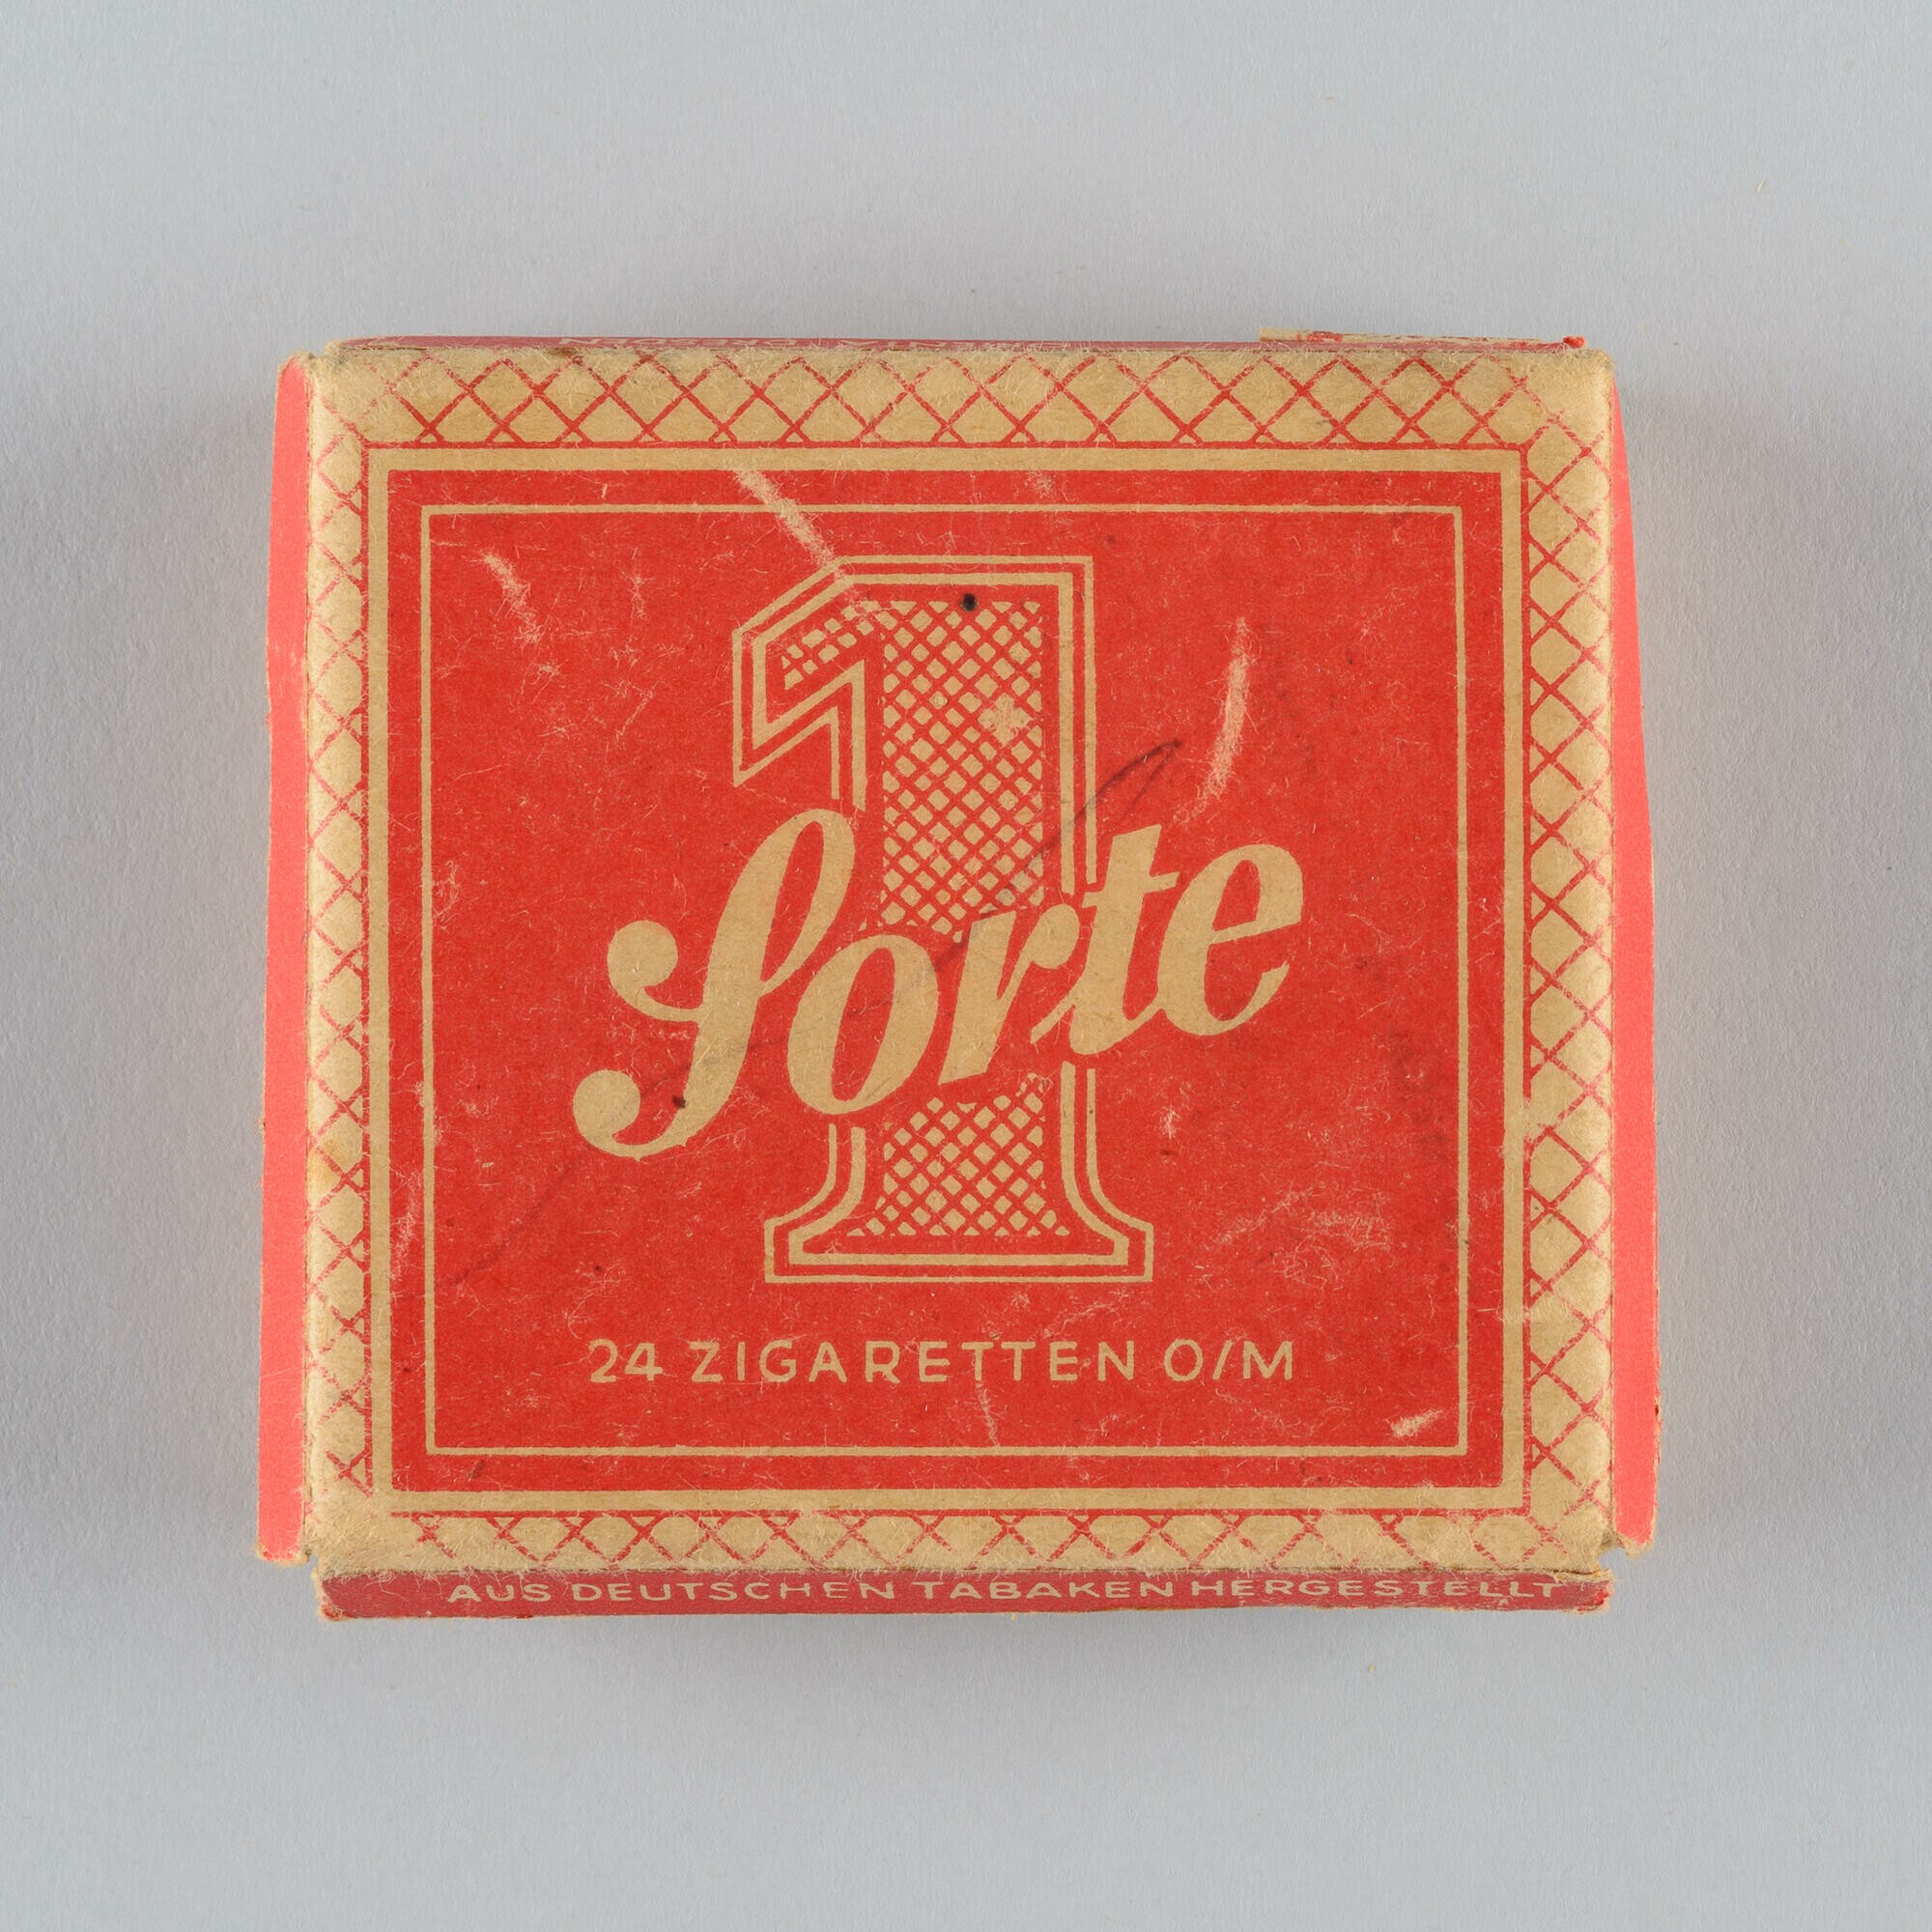 Zigarettenschachtel der Marke "Sorte 1" (Stadtmuseum Dresden CC BY-NC-ND)